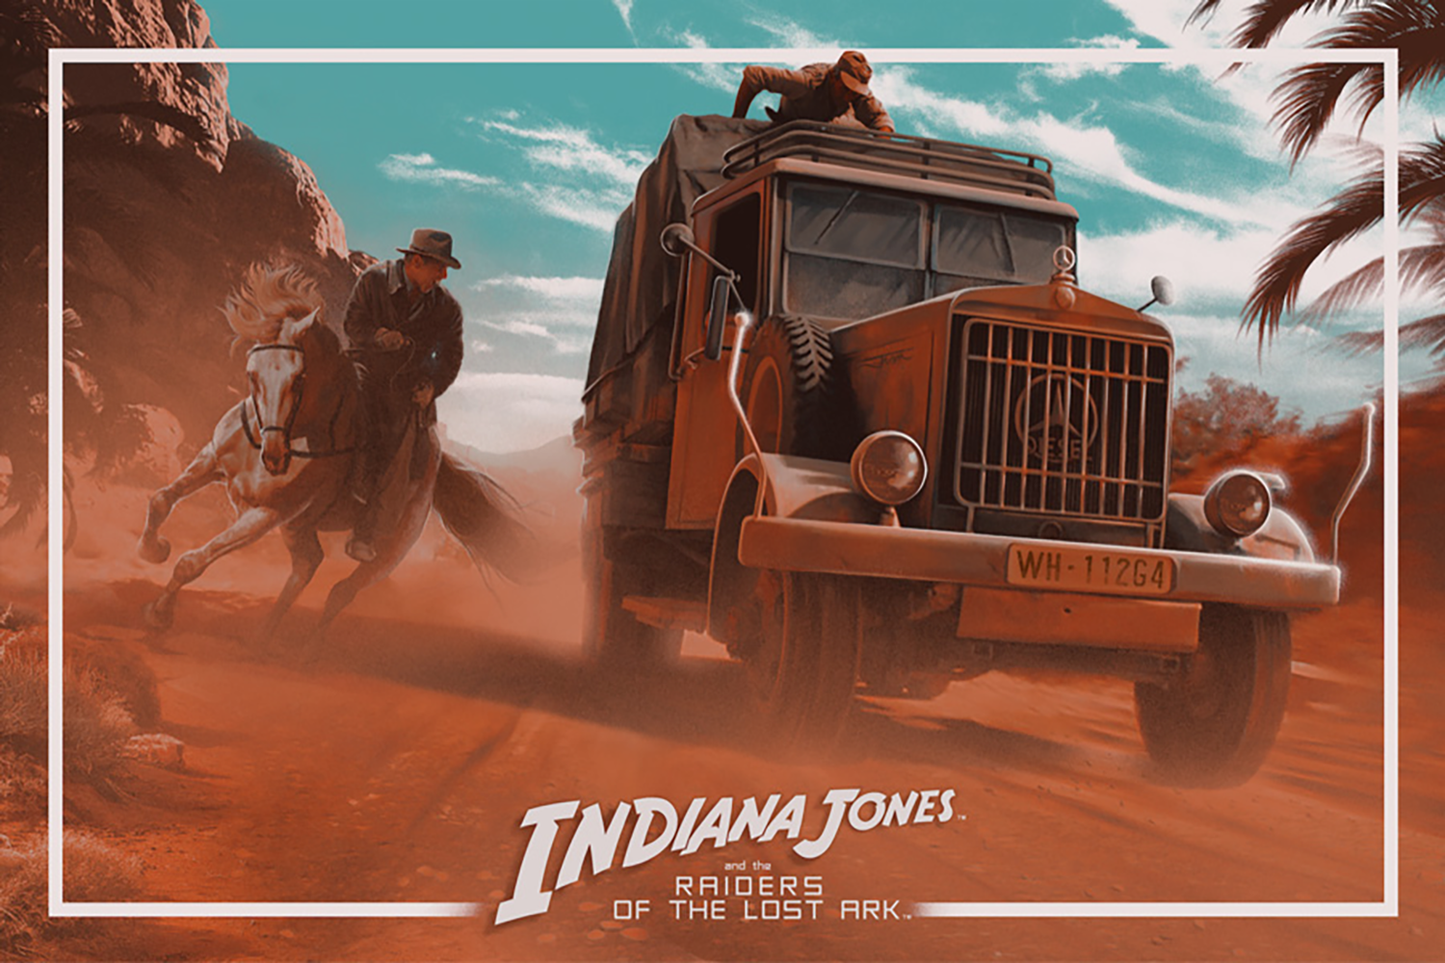 Juan Ramos "Indiana Jones and the Raiders of the Lost Ark"